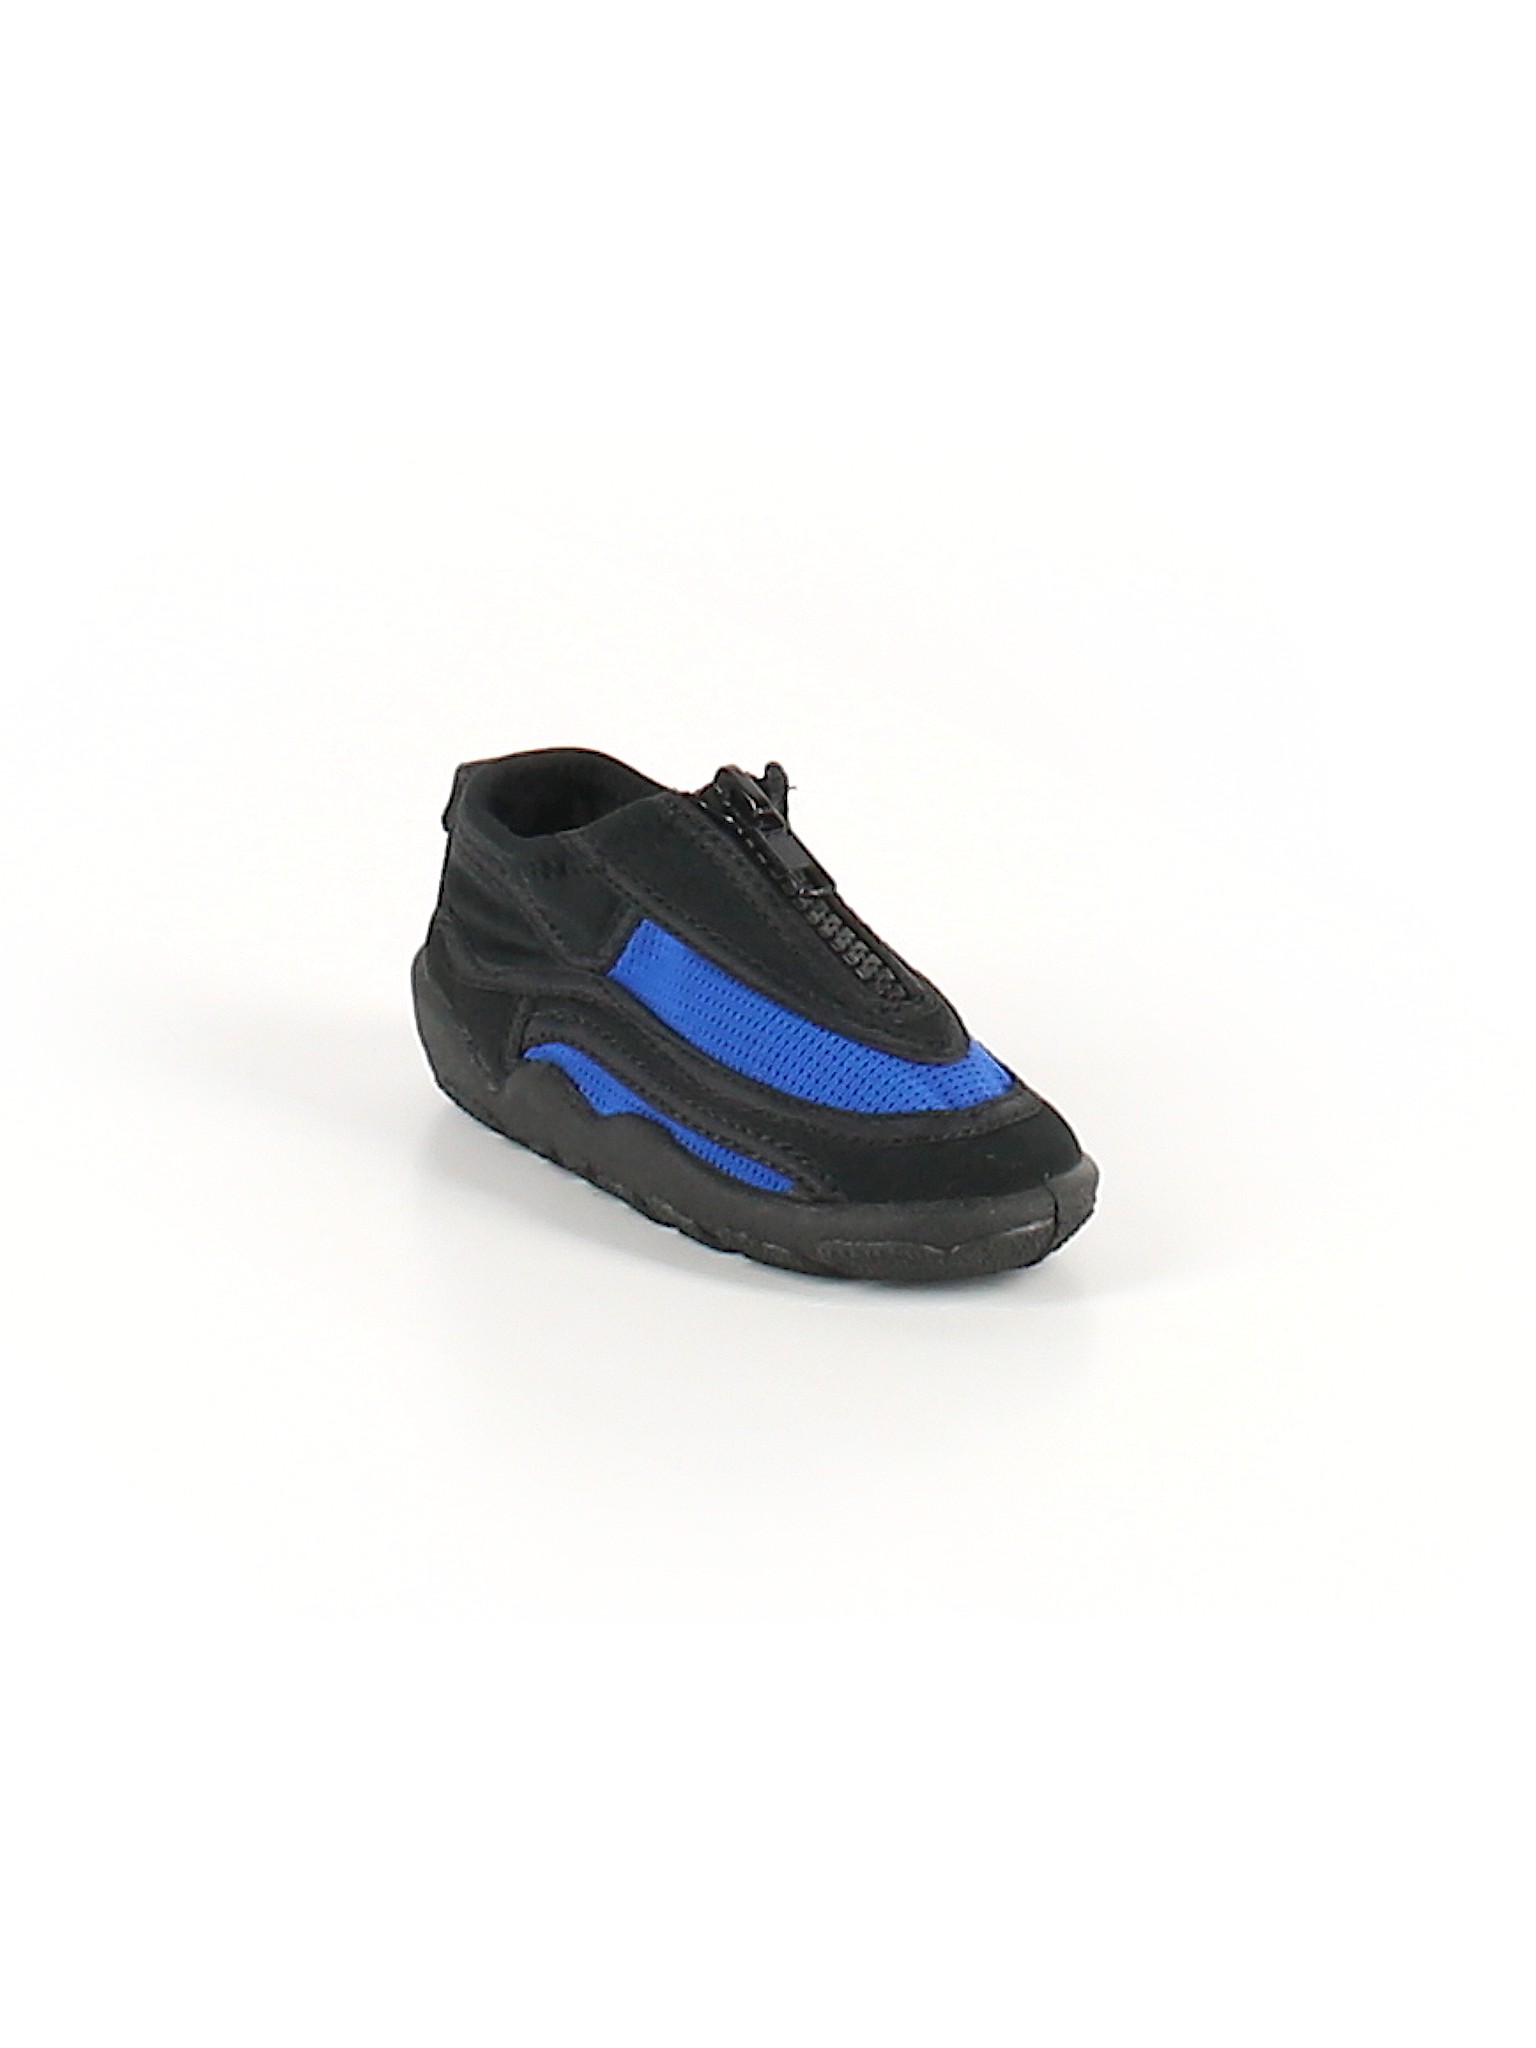 skadoo water shoes